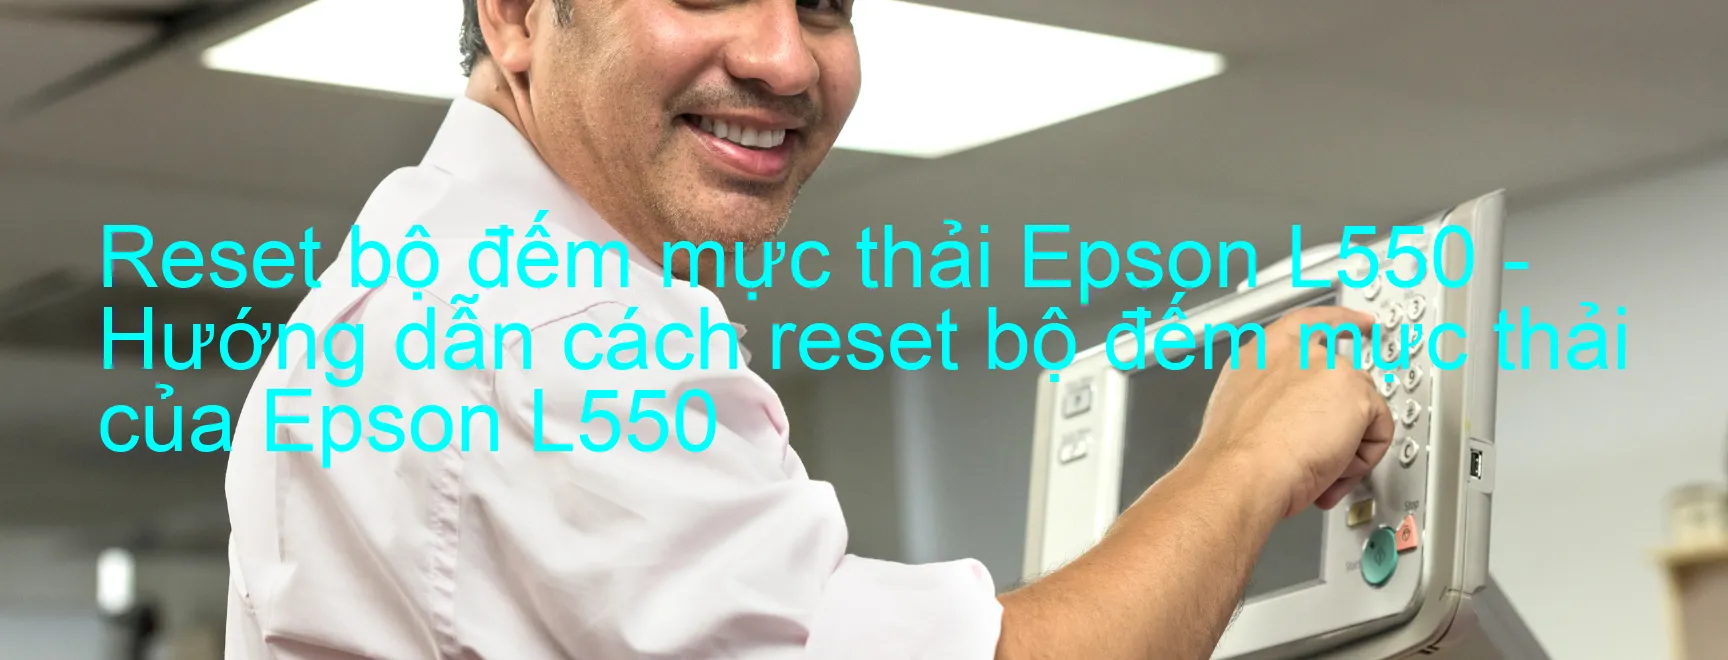 Reset bộ đếm mực thải Epson L550 - Hướng dẫn cách reset bộ đếm mực thải của Epson L550